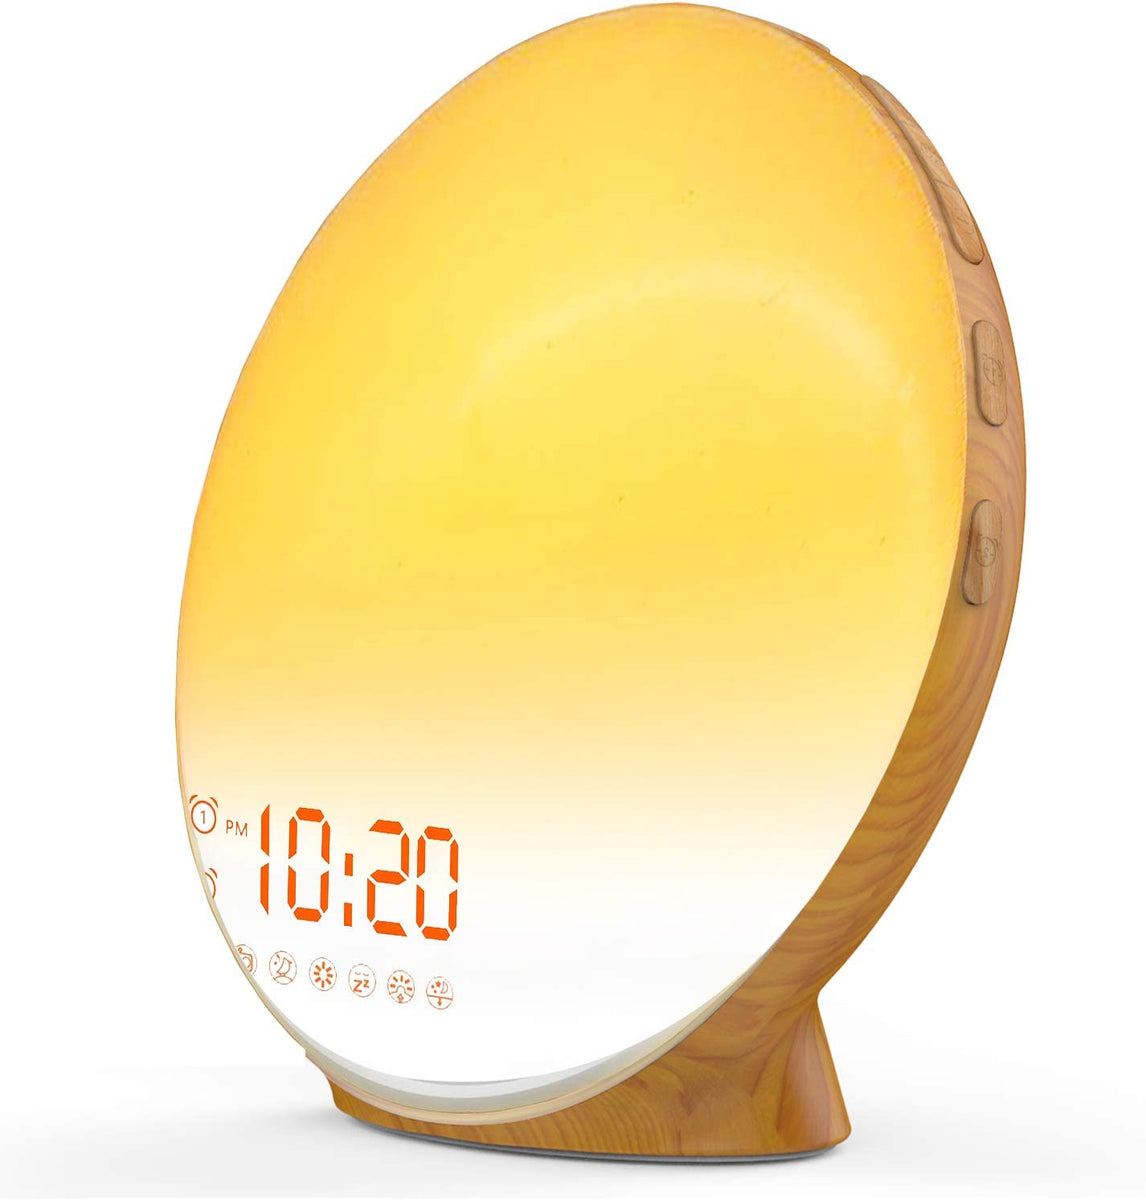 VENETIO Multifunctional Wake Up Light Sunrise Alarm Clock Ideal